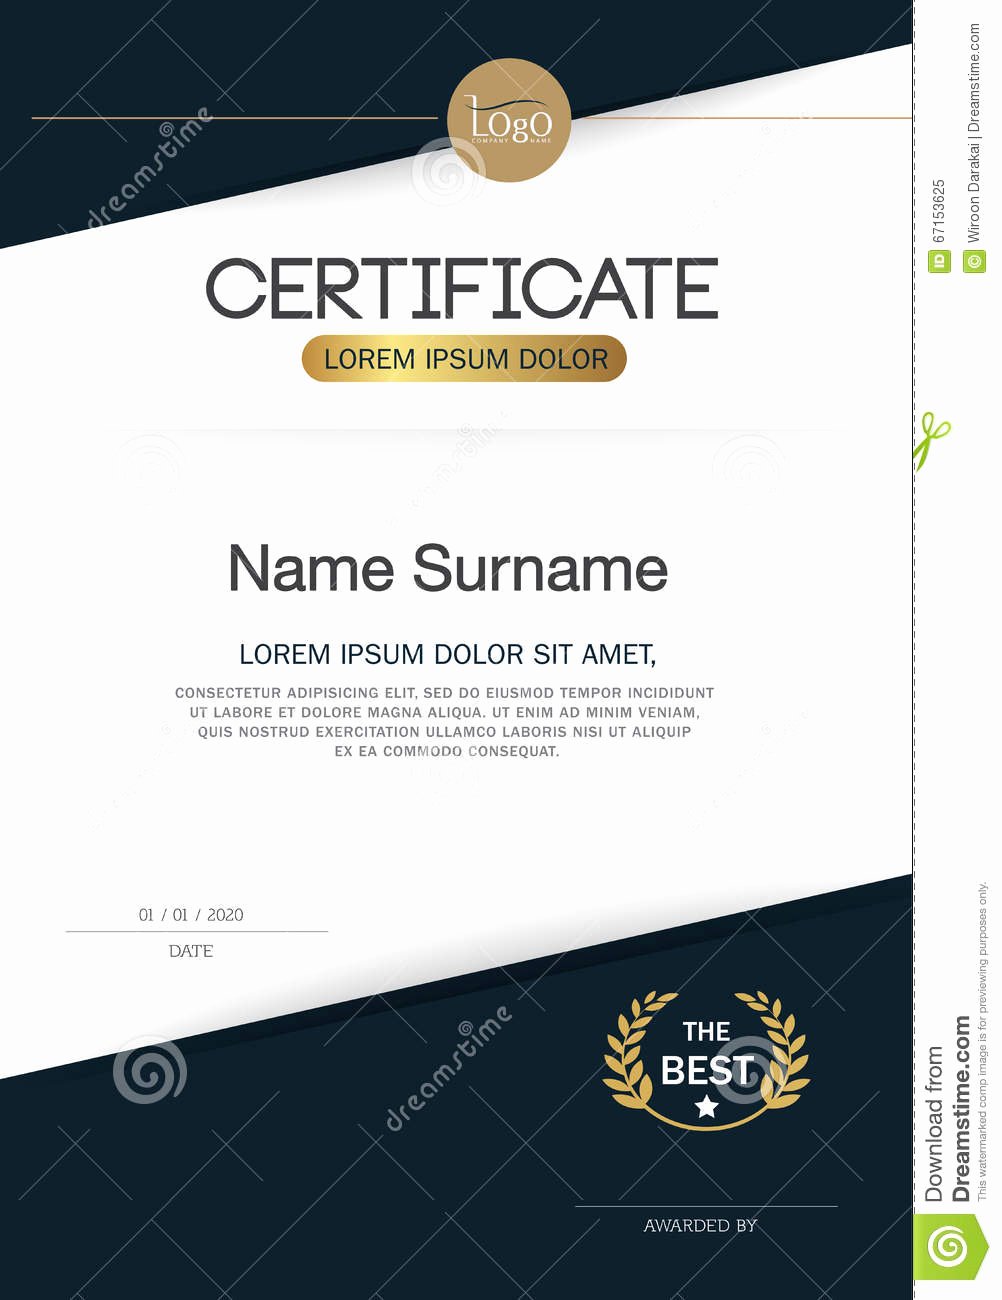 Certificate Of Achievement Frame Unique Certificate Achievement Frame Design Template Layout